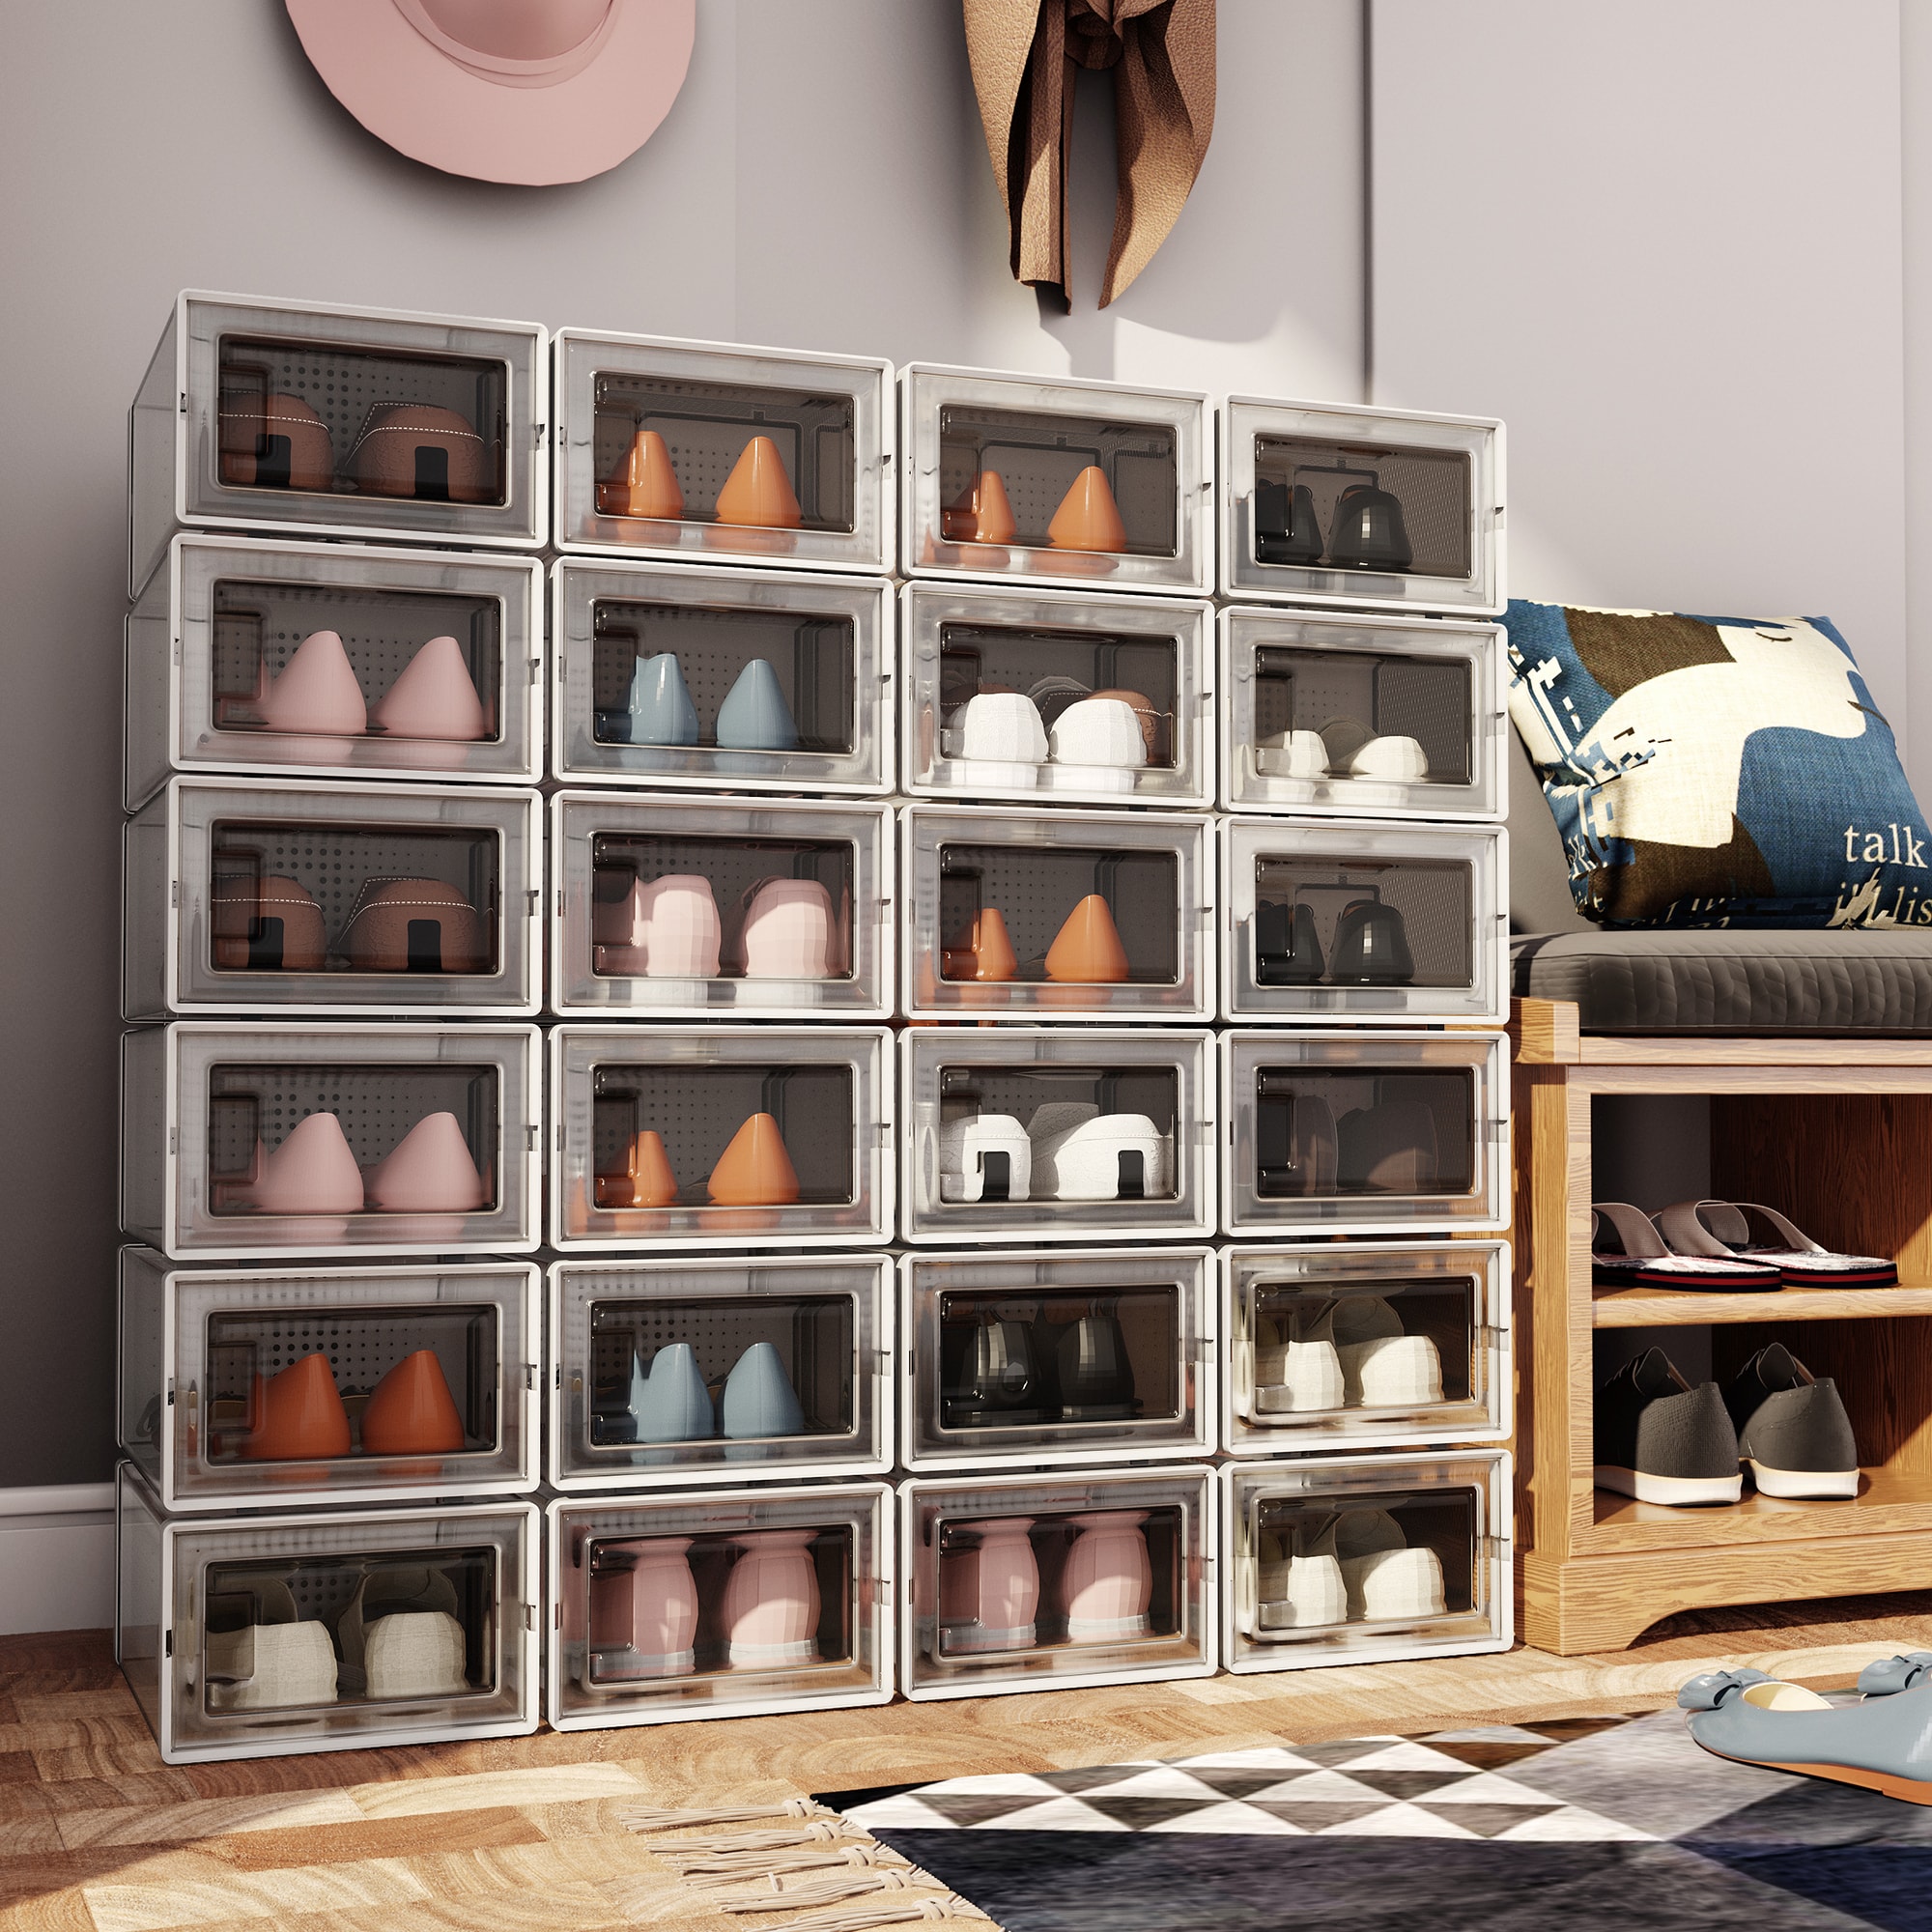 box l footwear office-accessories shoe-care Pouches